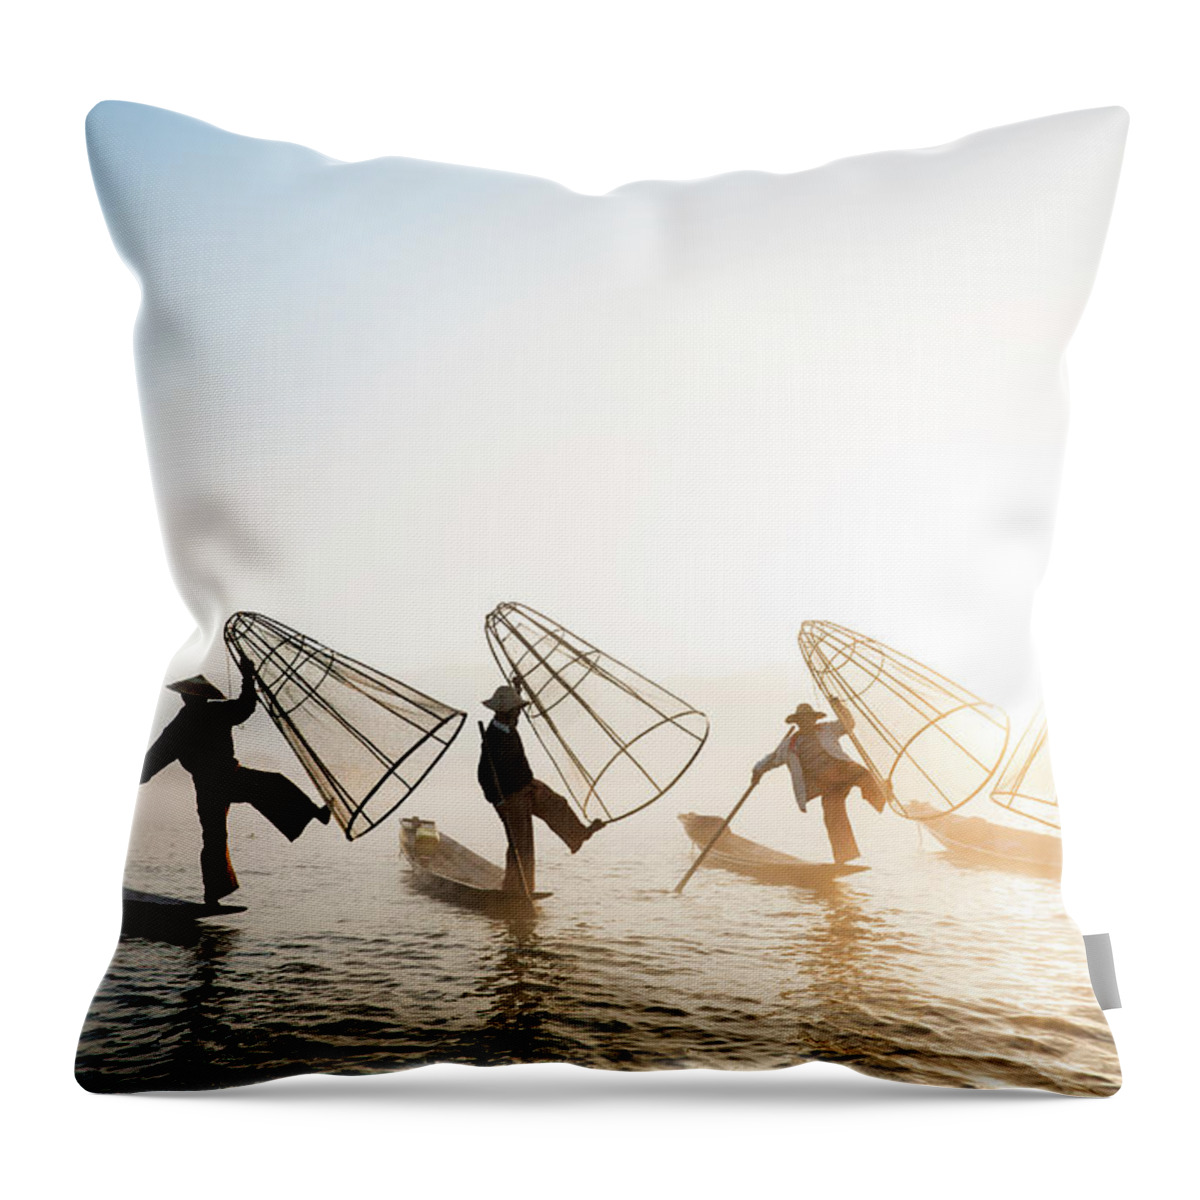 Estock Throw Pillow featuring the digital art Myanmar, Fishermen On Inle Lake #2 by Jordan Banks